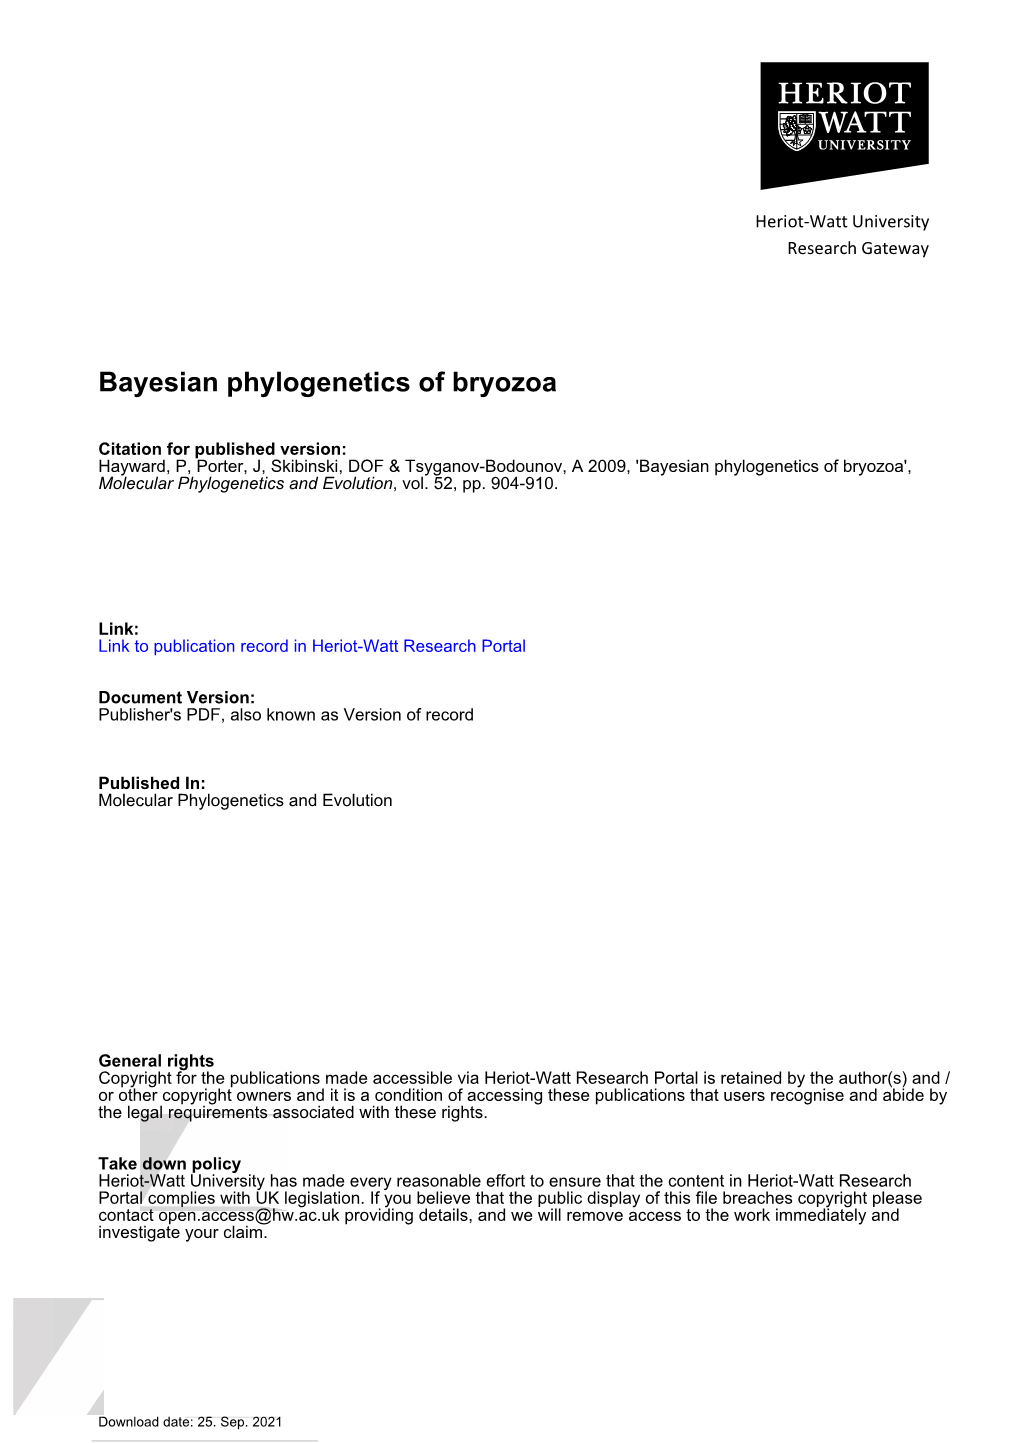 Bayesian Phylogenetics of Bryozoa